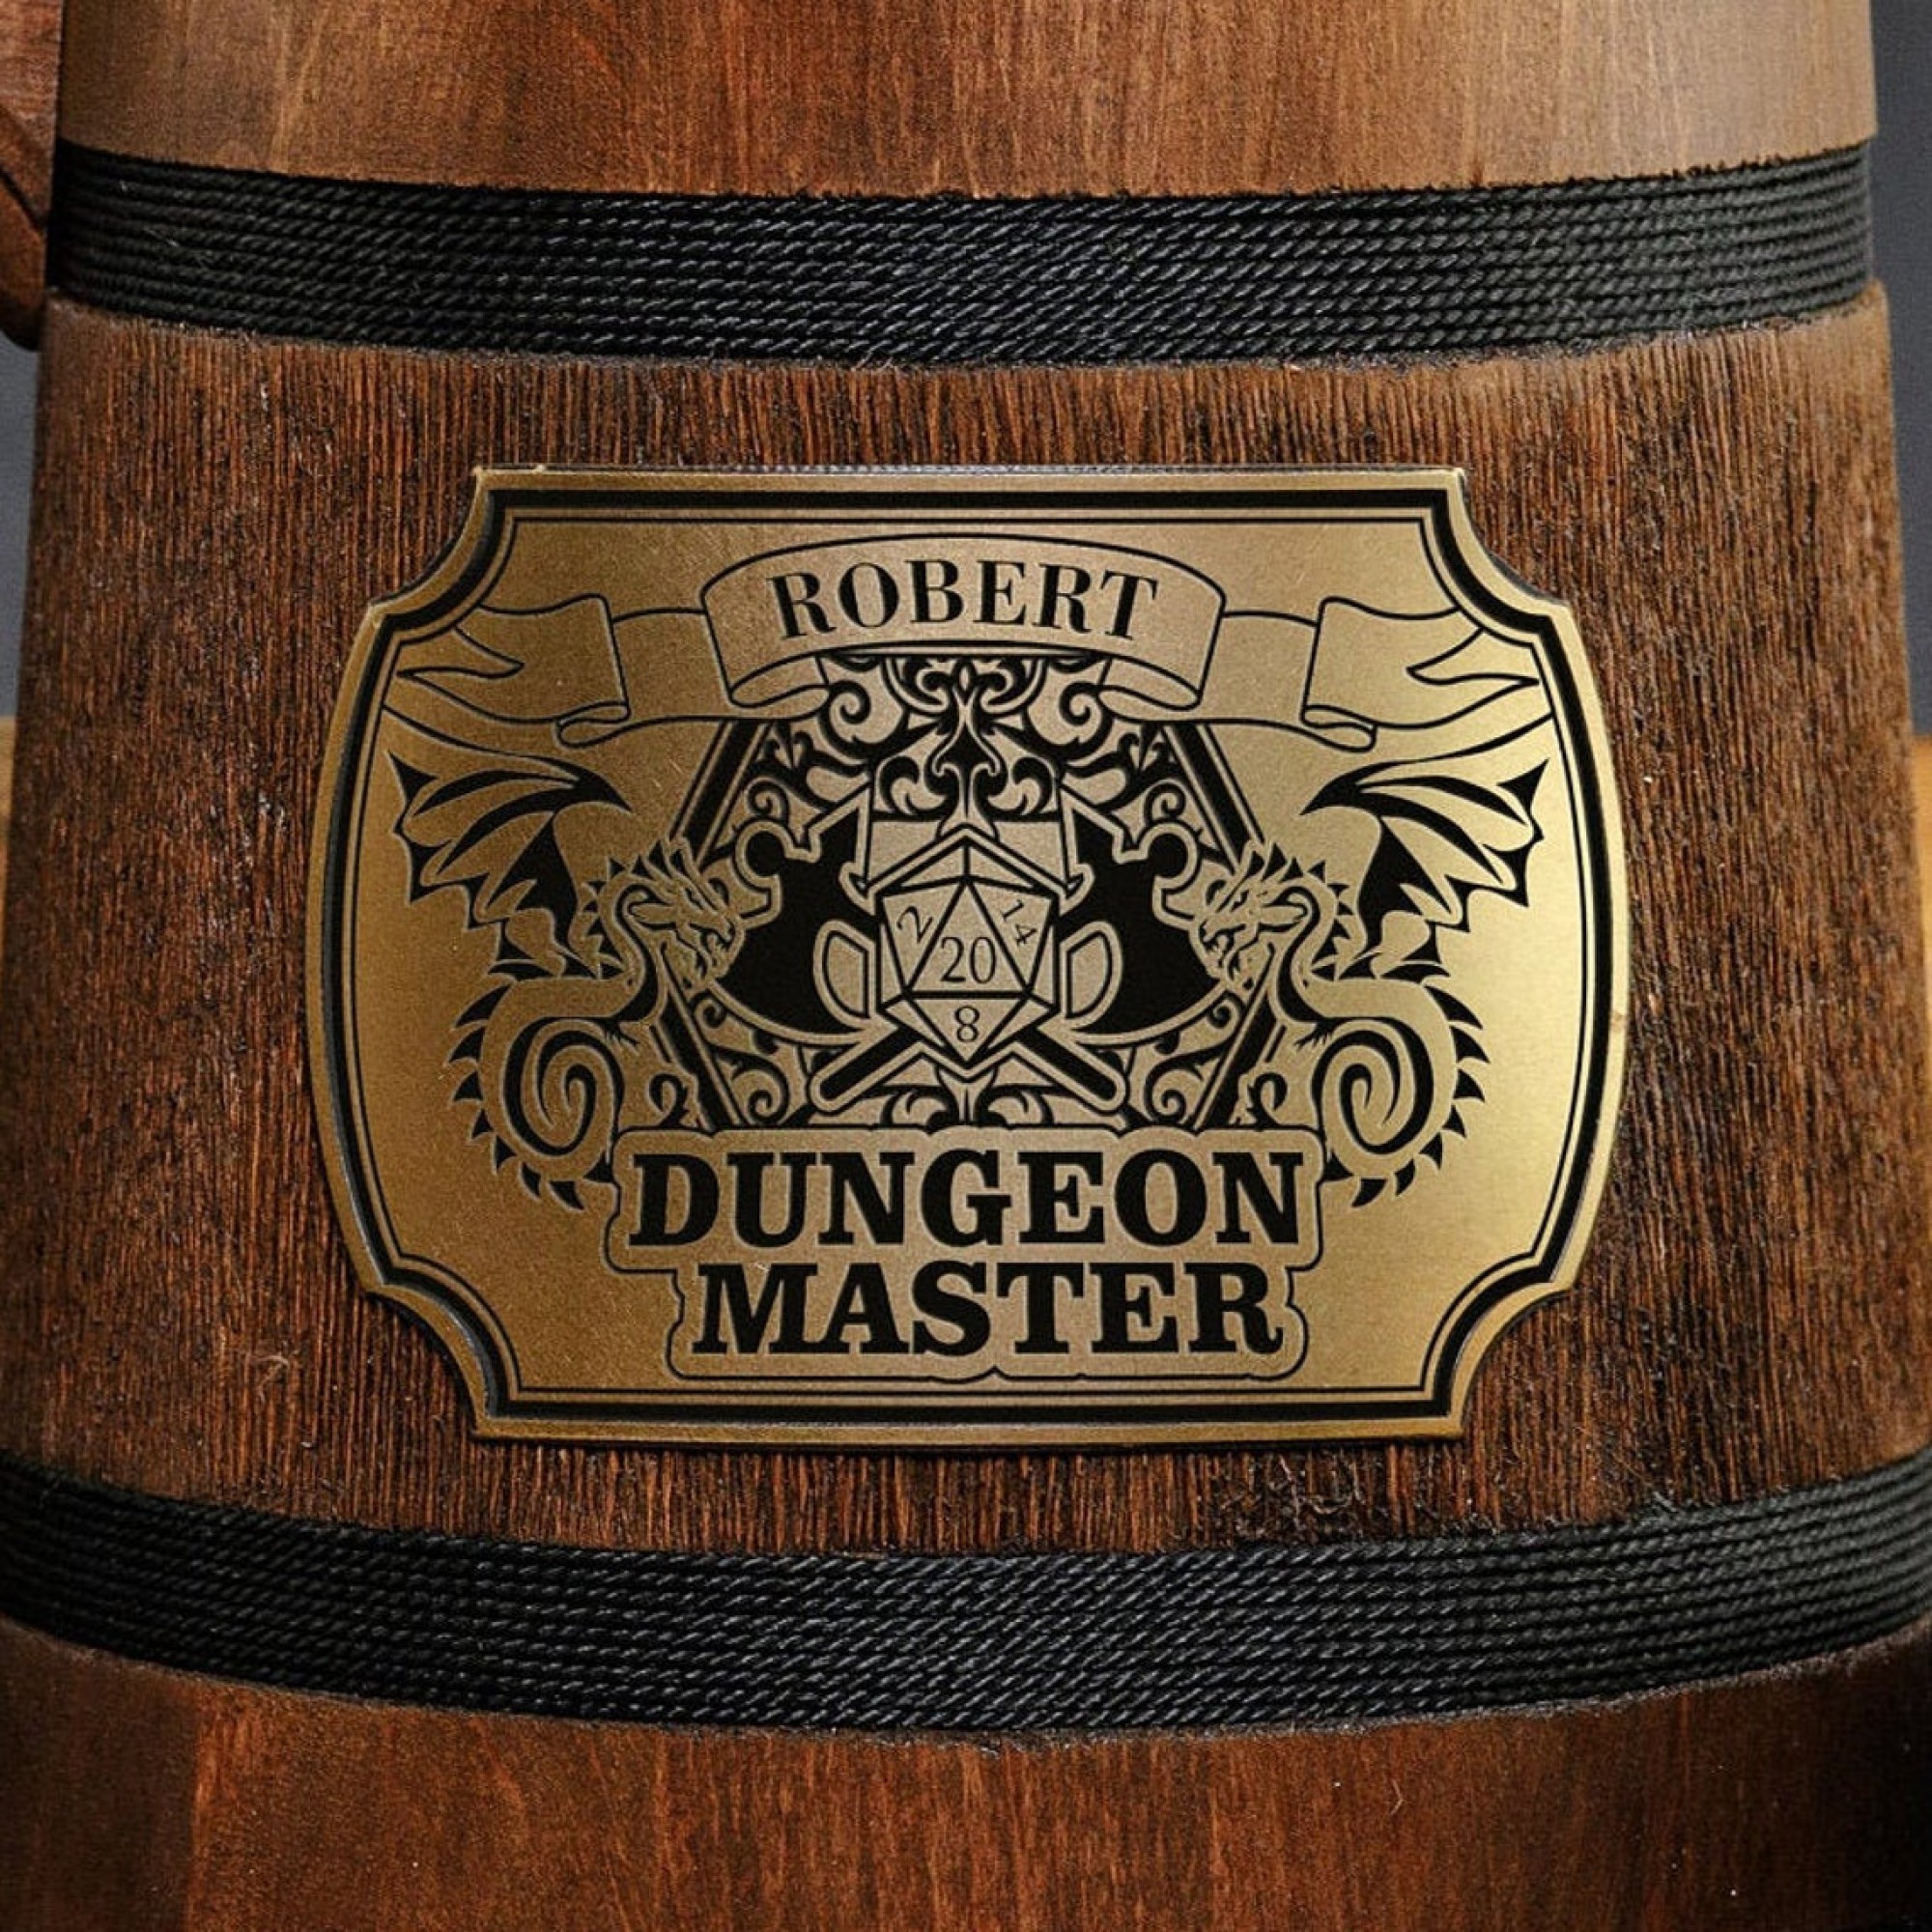 Dungeons and dragons mug,Dungeon master mug,Groomsmen wooden beer mug,Handmade beer stein,Wooden mugs,Groomsmen beer mug,Groomsmen gift